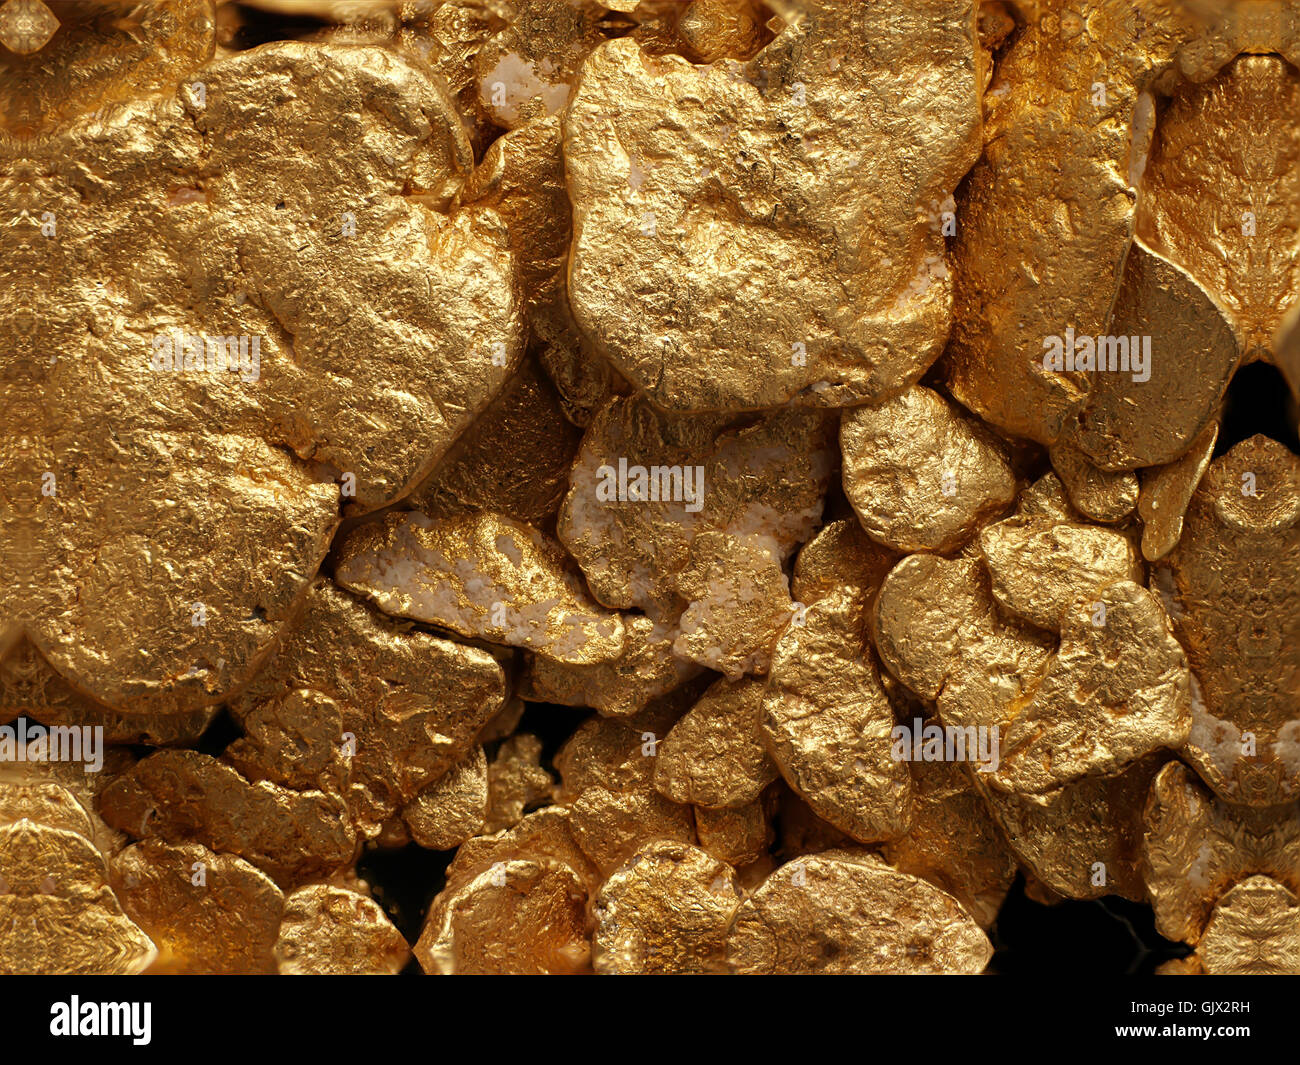 brilliance gold jewelry Stock Photo